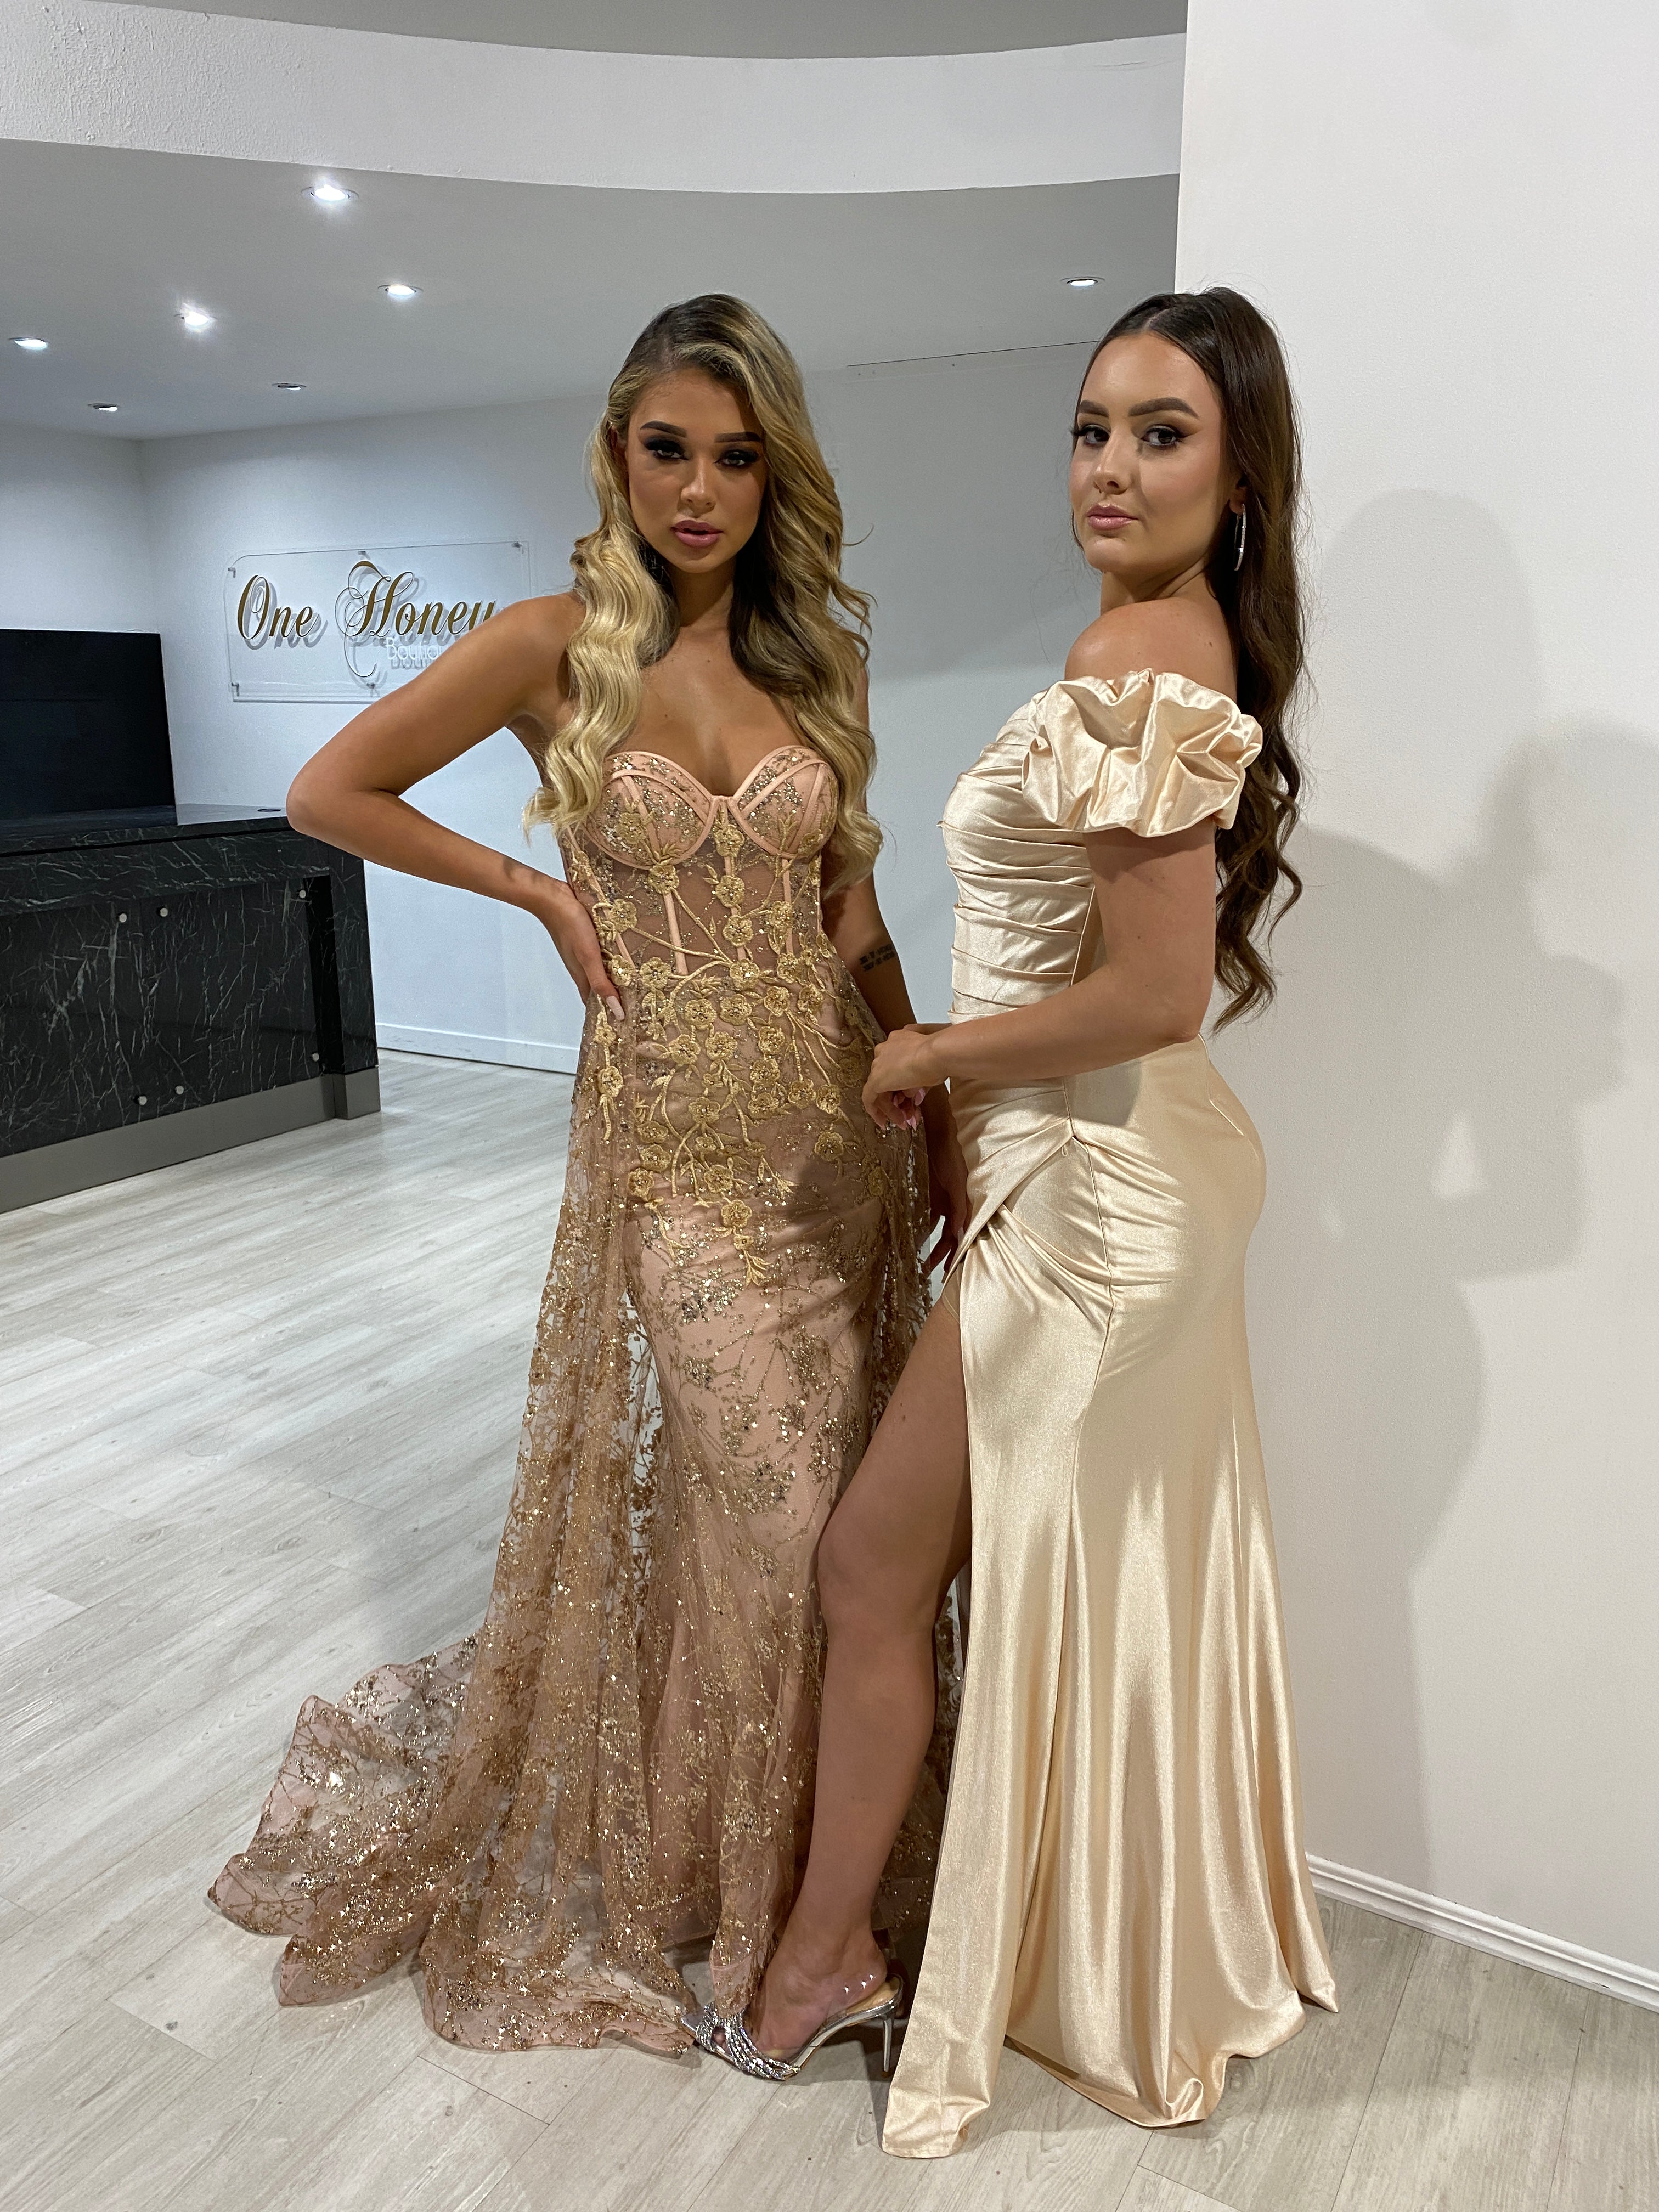 Gold/Rose Gold Dresses for Best Price in Australia